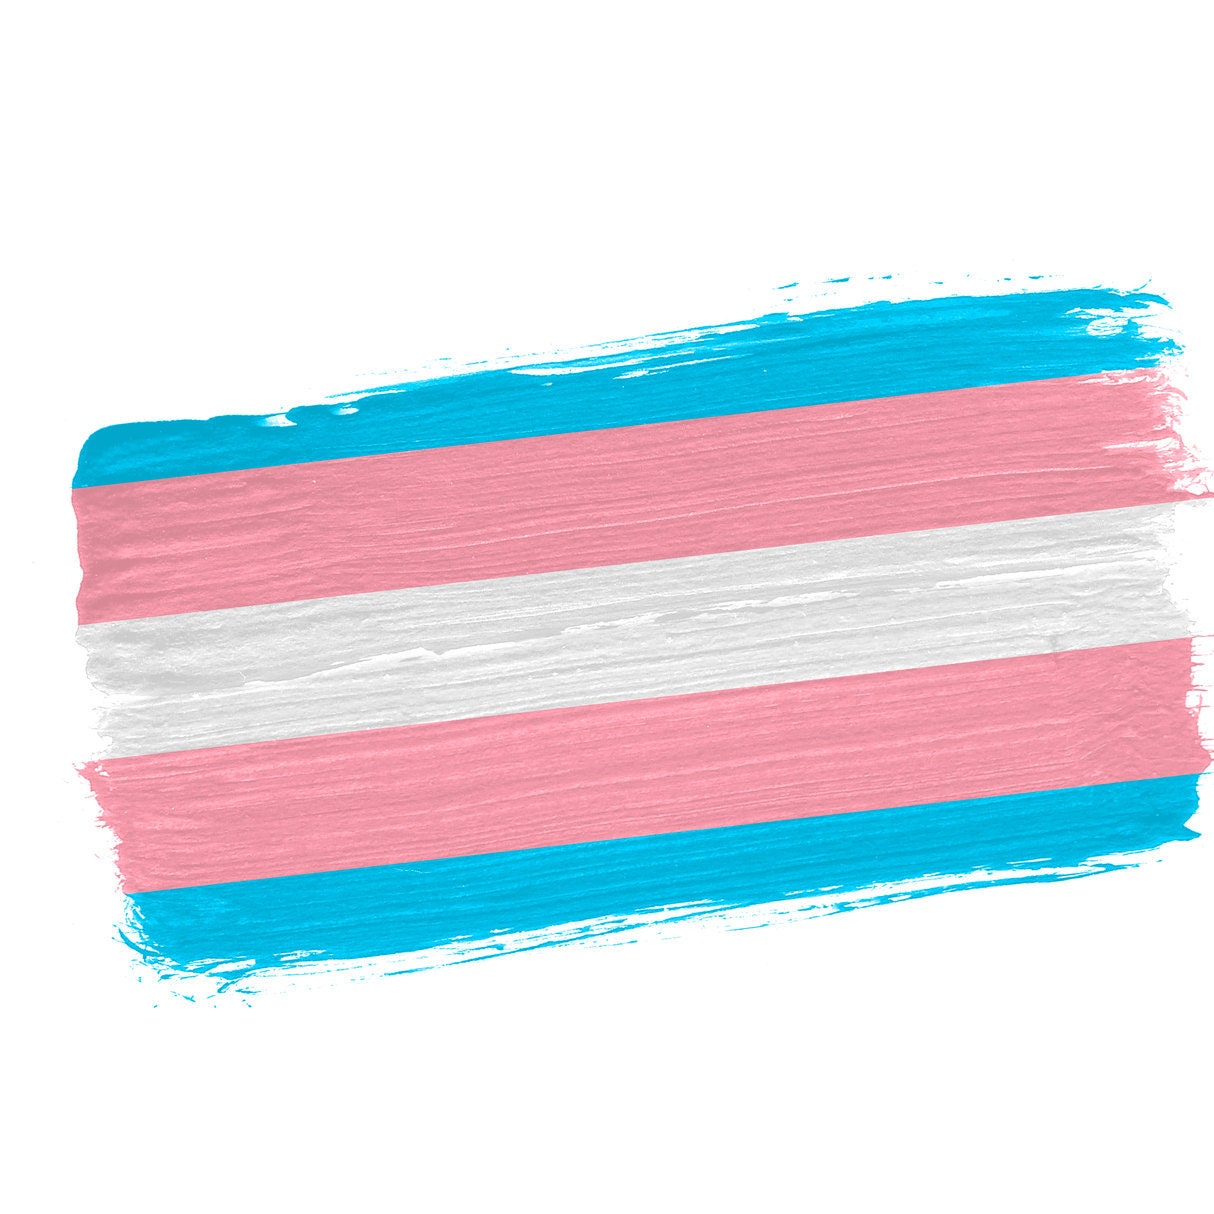 TransGenX 4 Inch Wide Tape. Extra Wide for Trans FTM Chest Binder for  Transgender